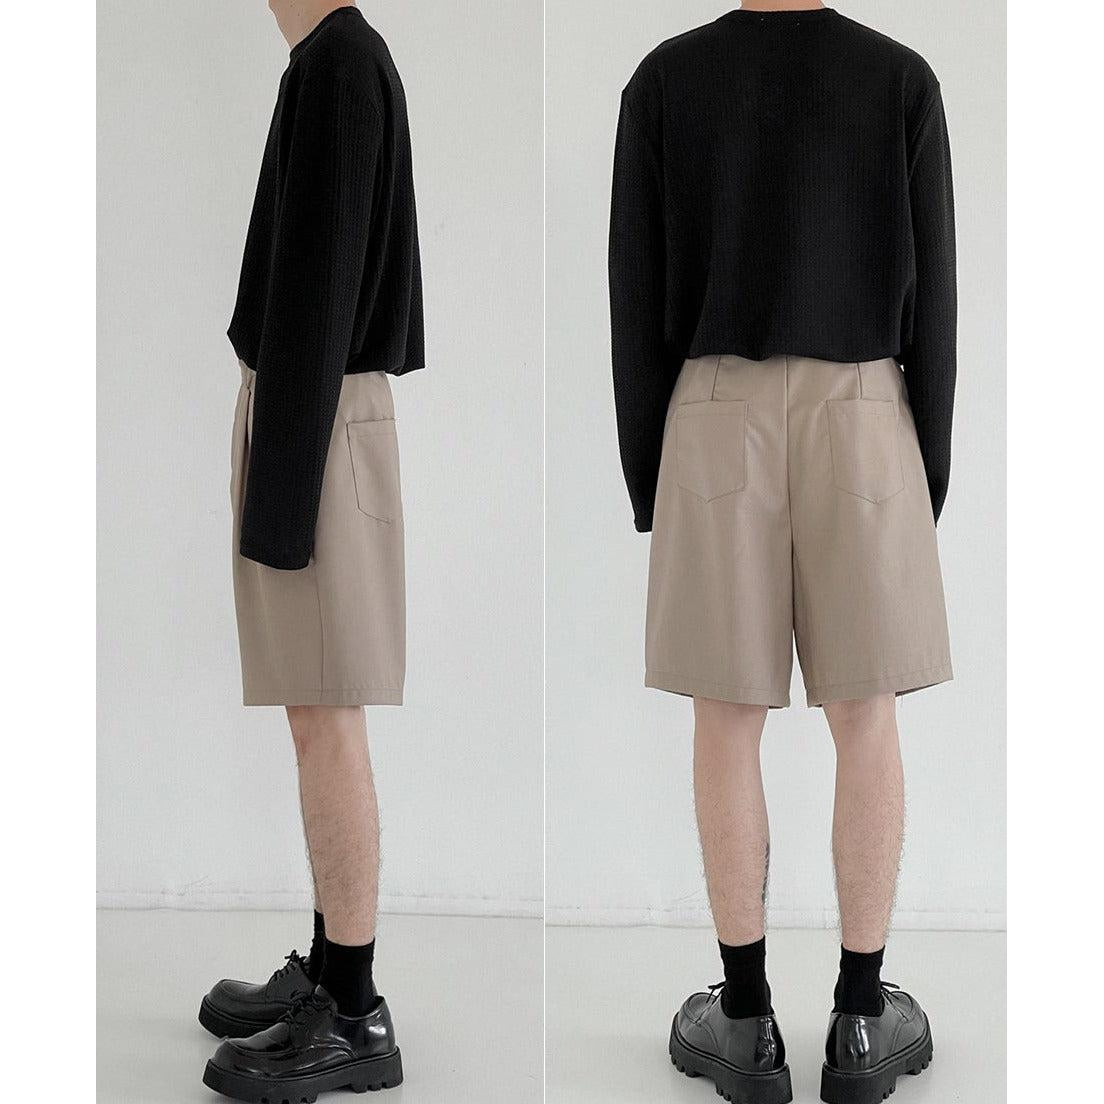 Zhou Essential Pleated Shorts-korean-fashion-Shorts-Zhou's Closet-OH Garments